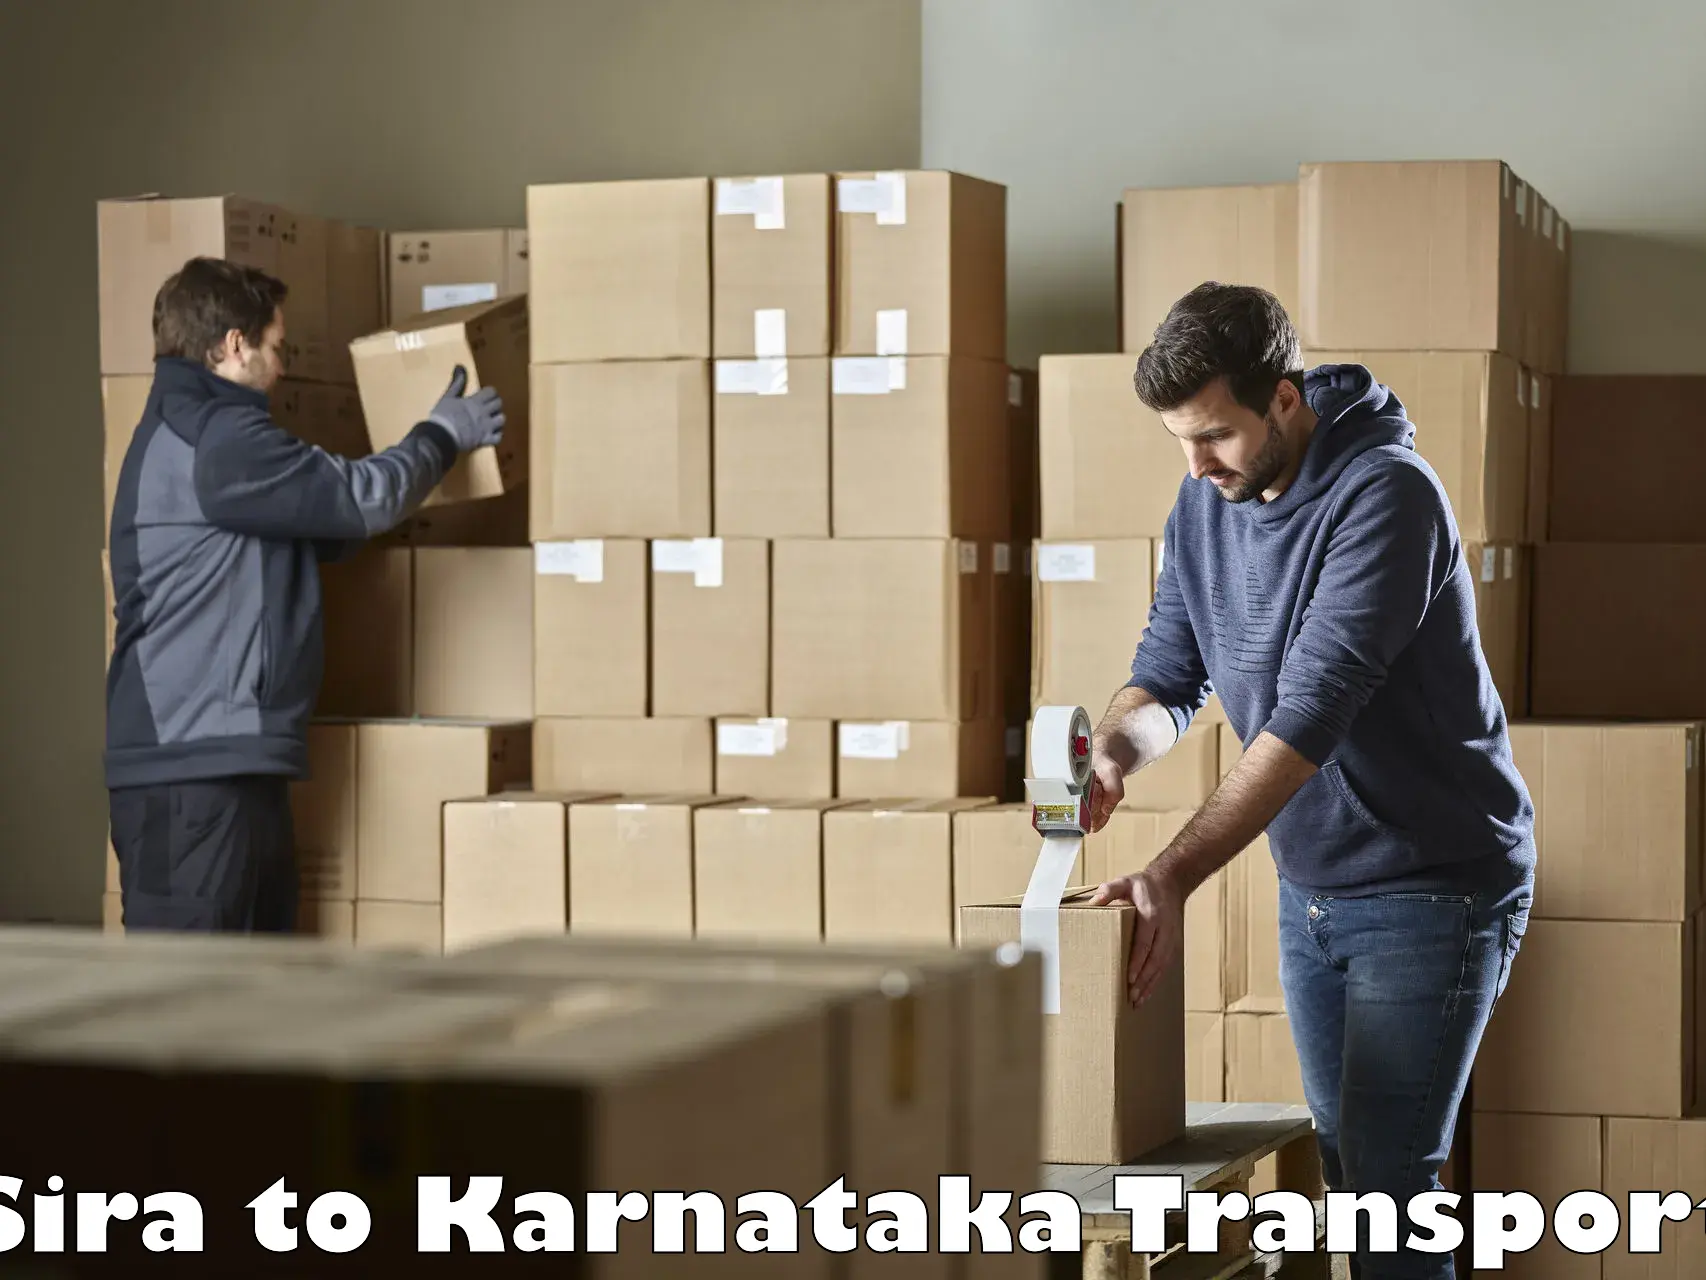 Bike transport service Sira to Karnataka